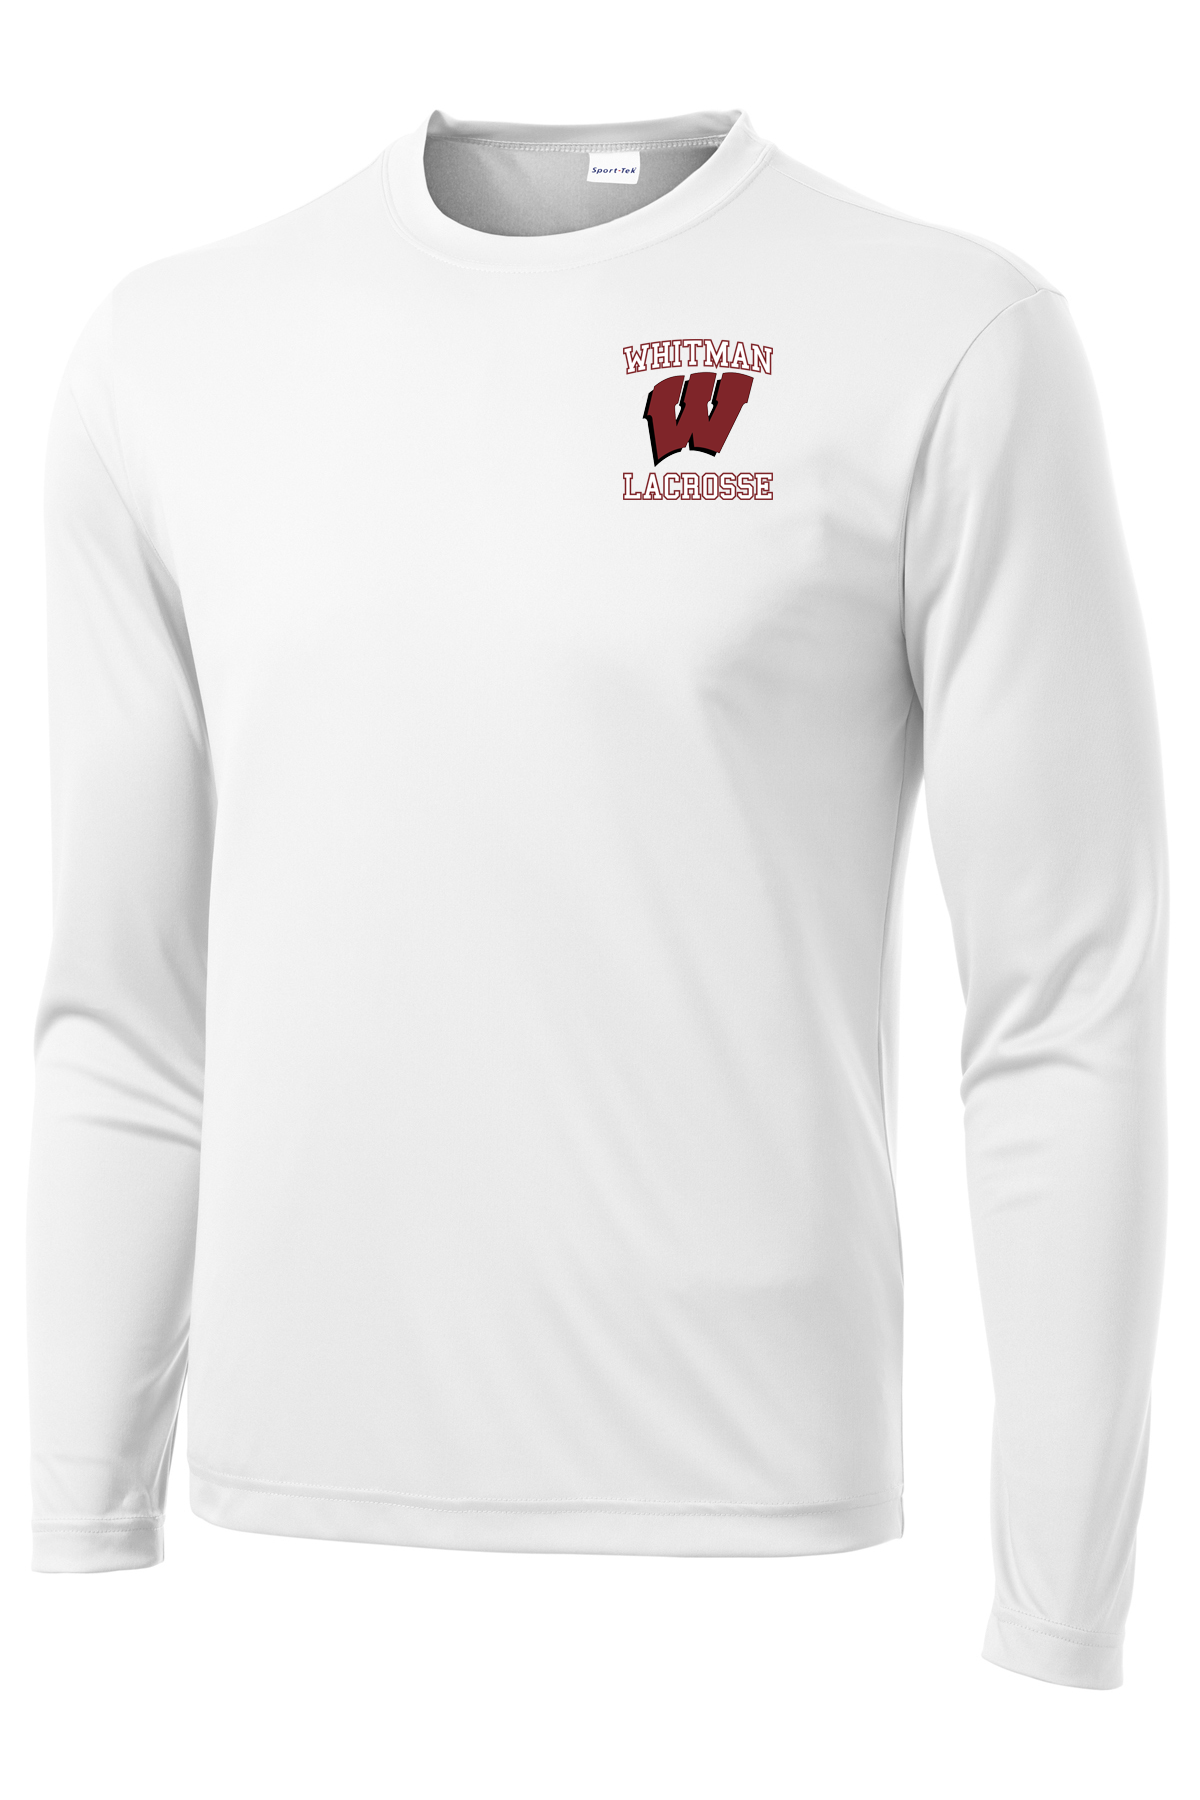 Whitman Lacrosse Men's White Long Sleeve Performance Shirt